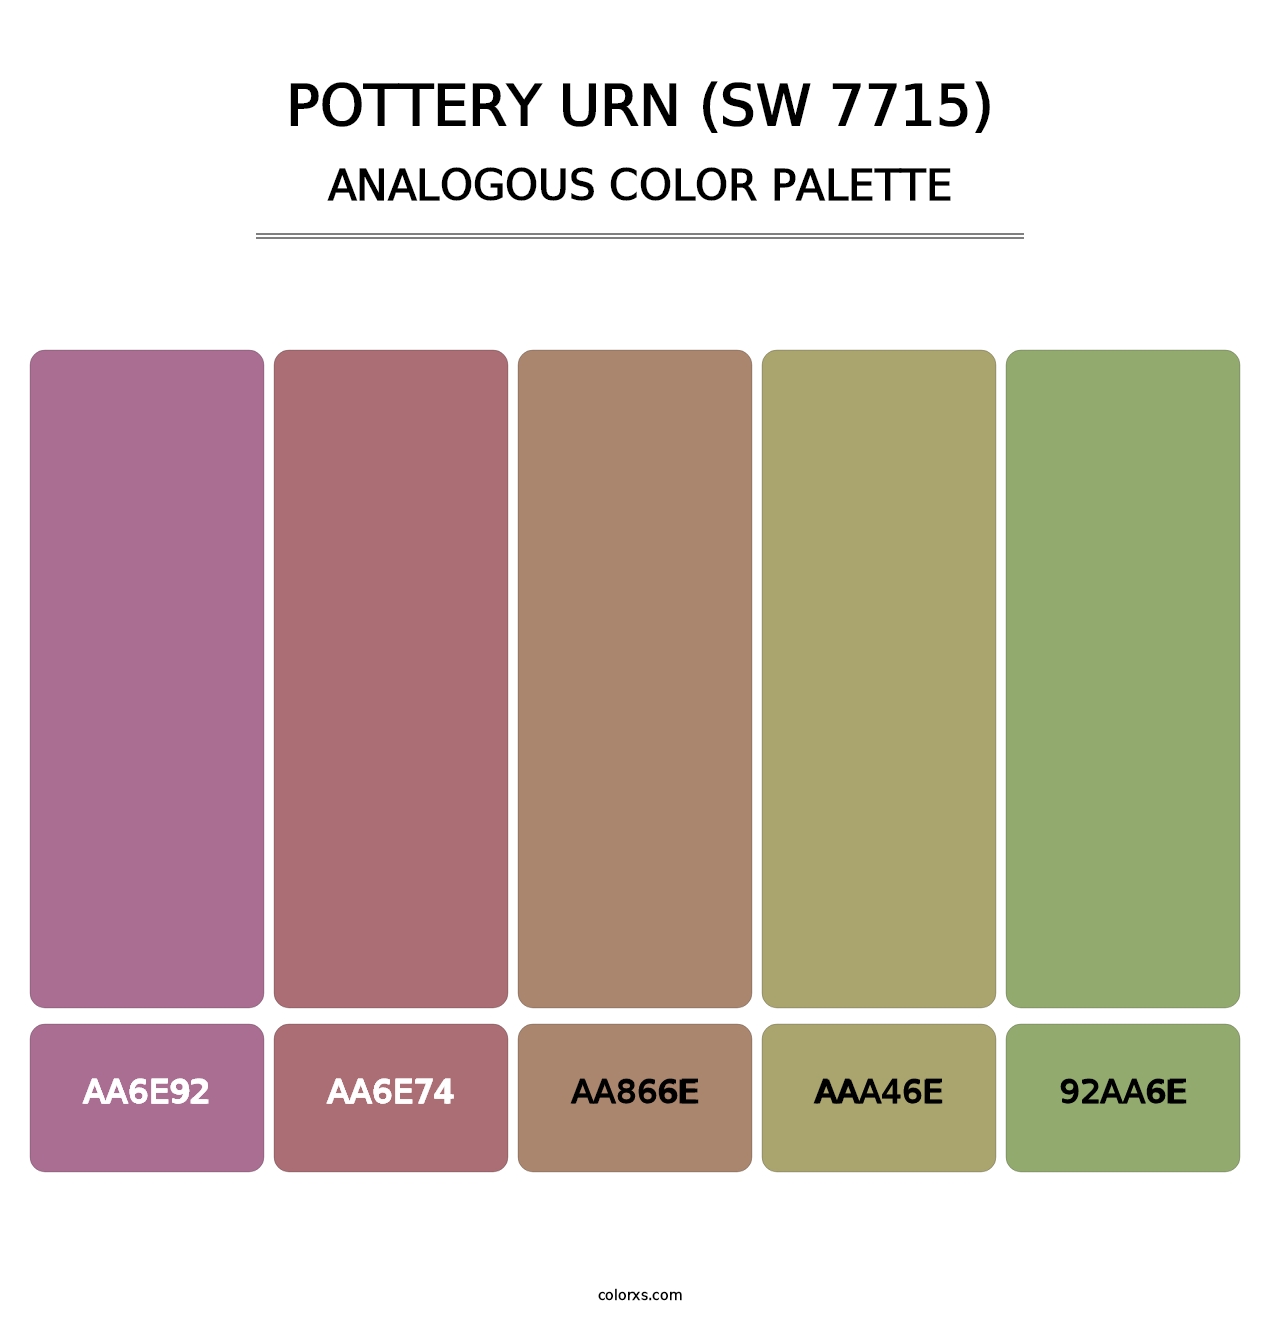 Pottery Urn (SW 7715) - Analogous Color Palette